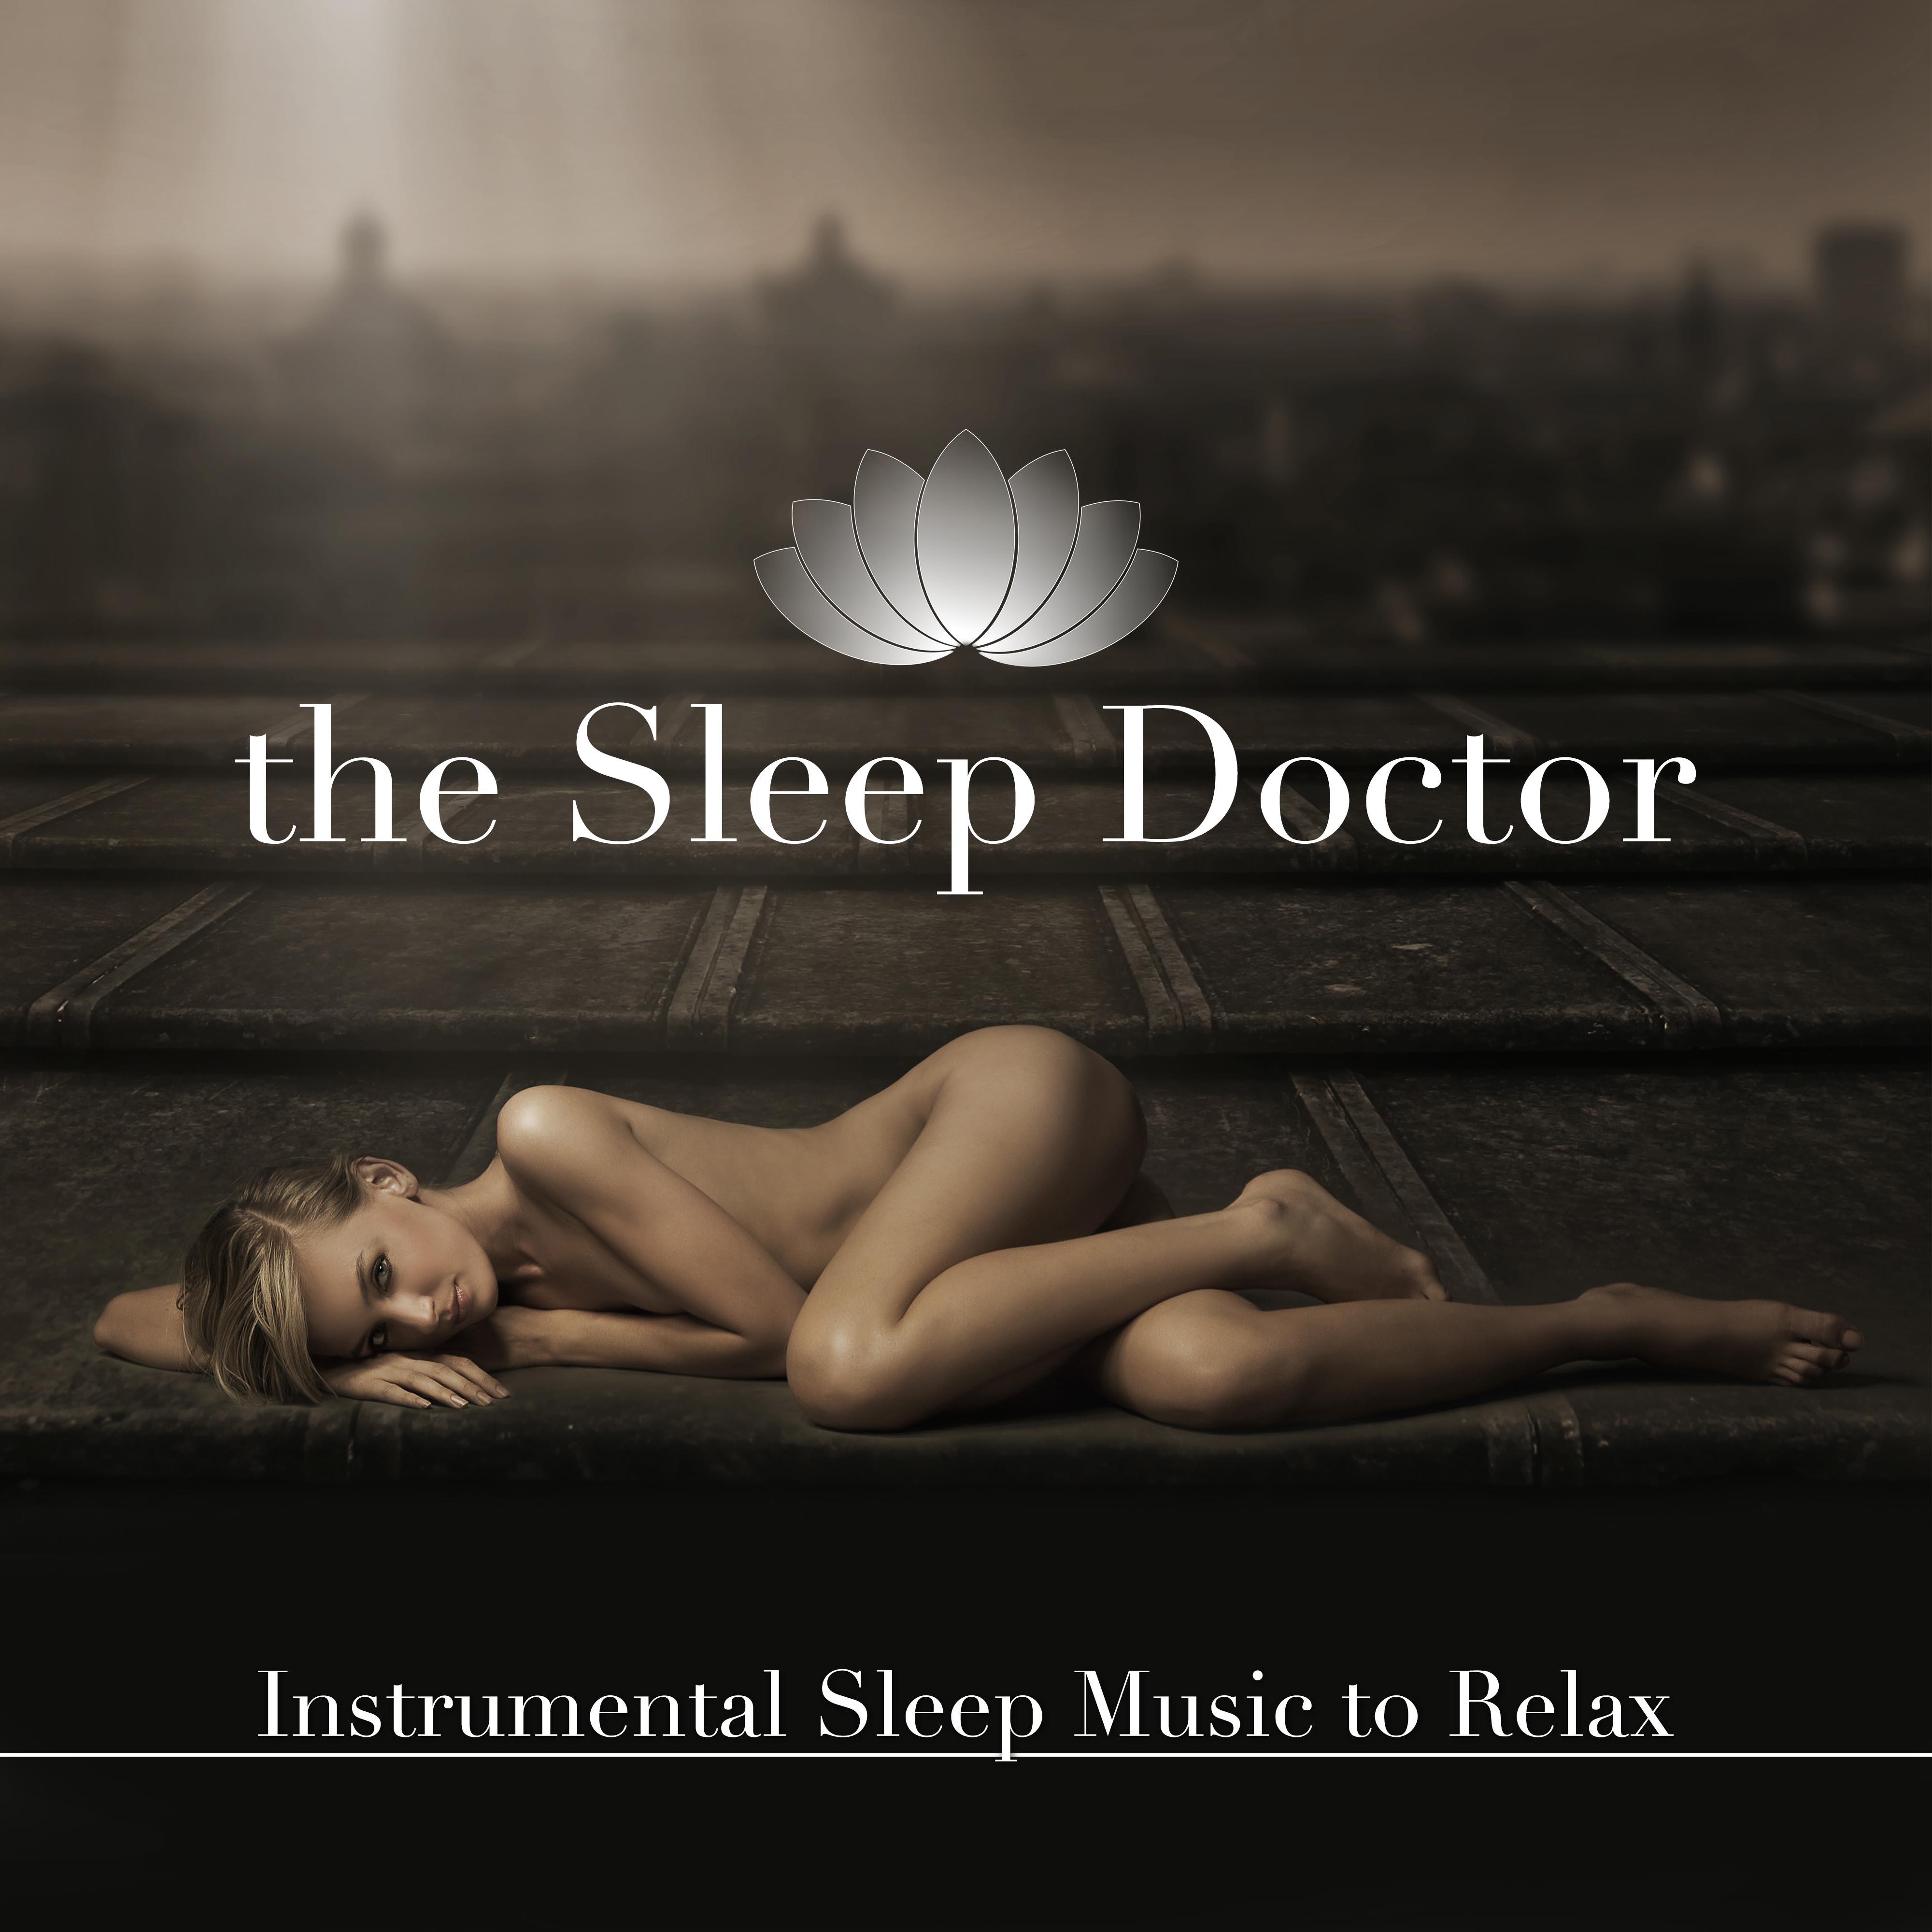 the Sleep Doctor - Instrumental Sleep Music to Relax